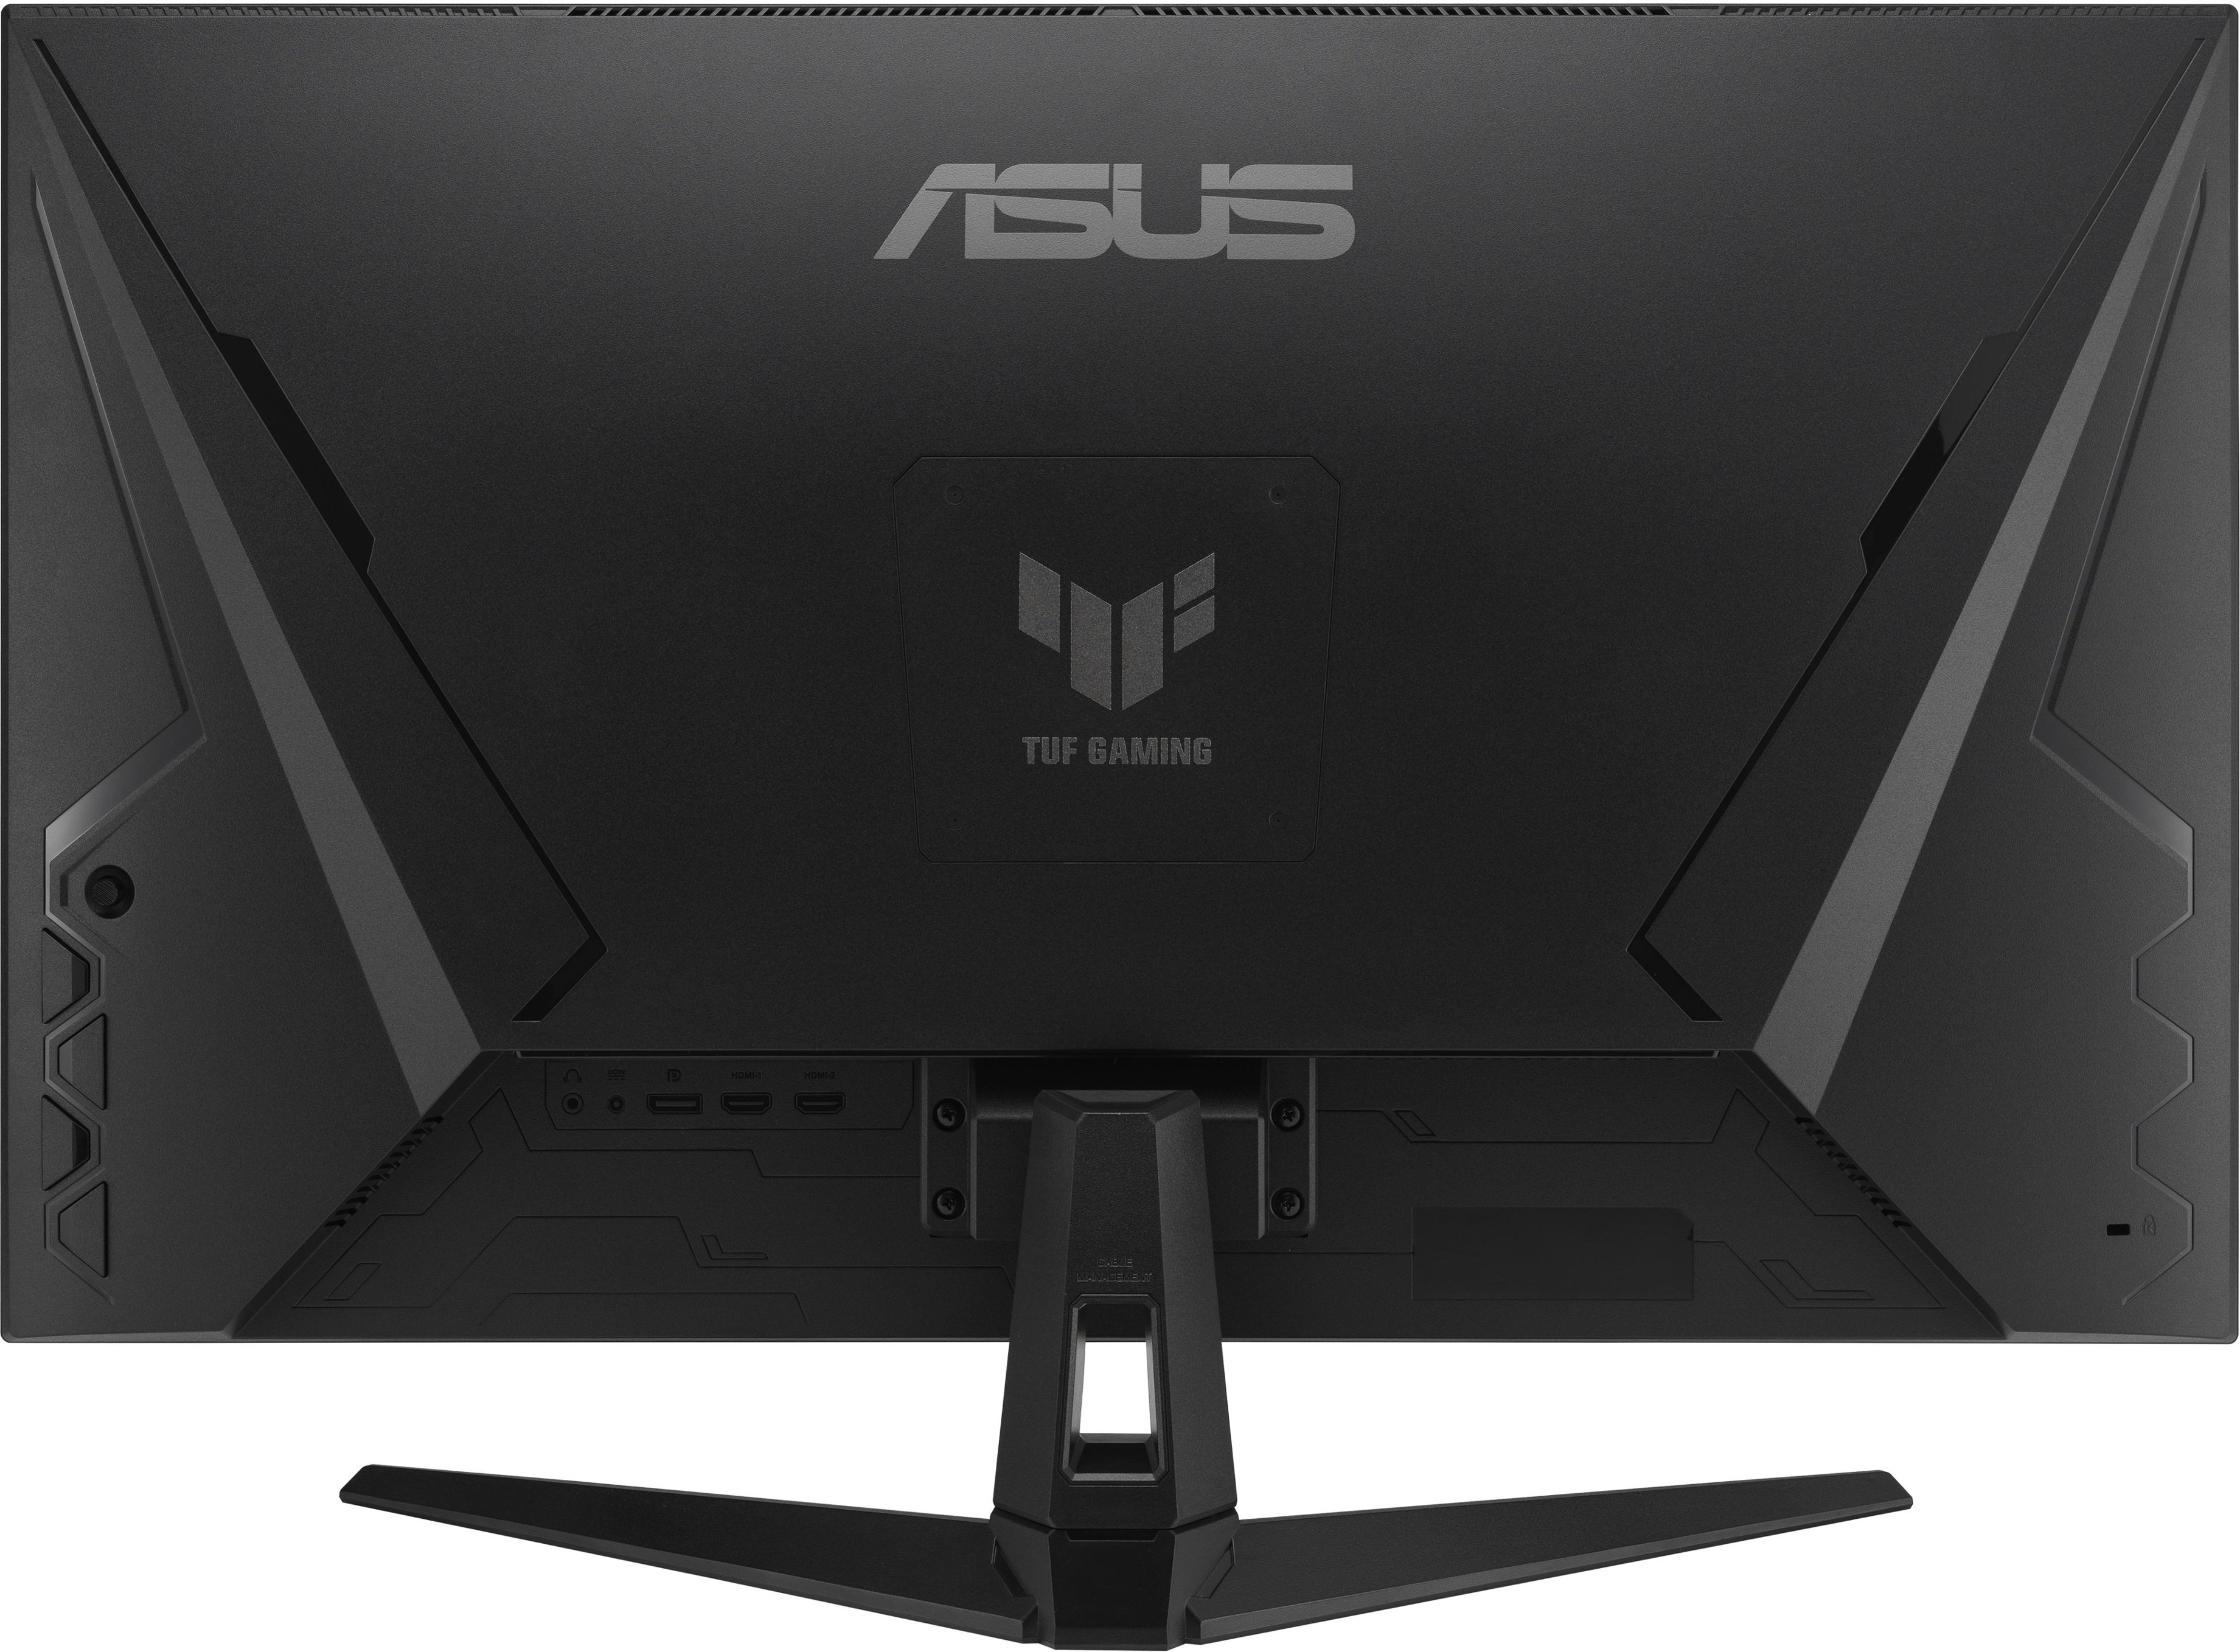 Back View: ASUS - TUF Gaming 31.5" QHD 170Hz 1ms FreeSync Premium Gaming Monitor with HDR (DisplayPort, HDMI) - Black